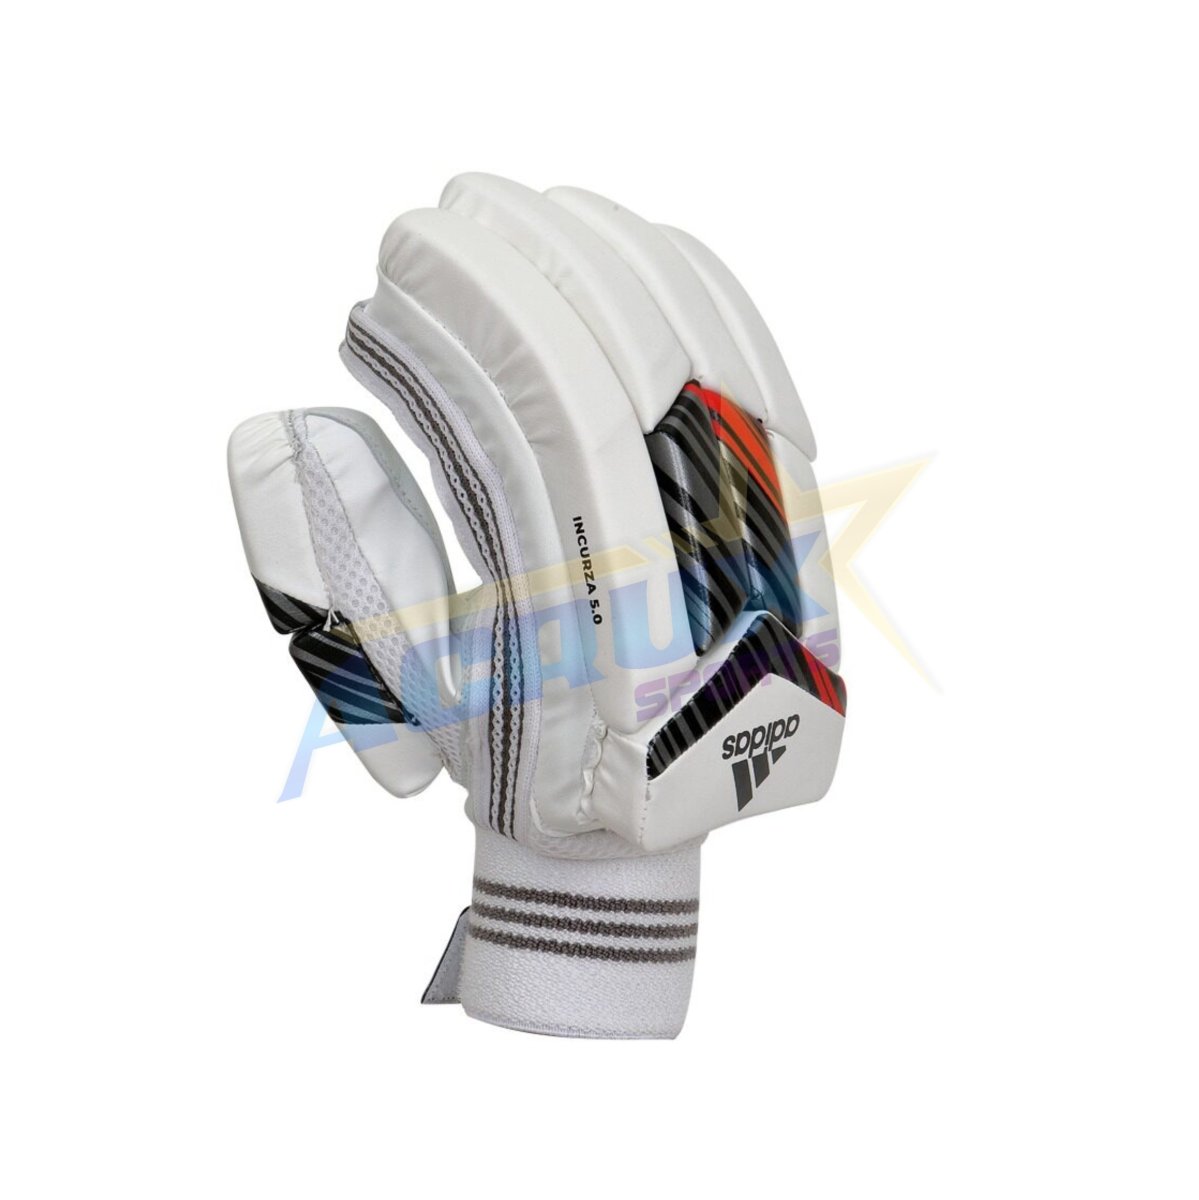 Adidas Incurza 5.0 Cricket Batting Gloves.